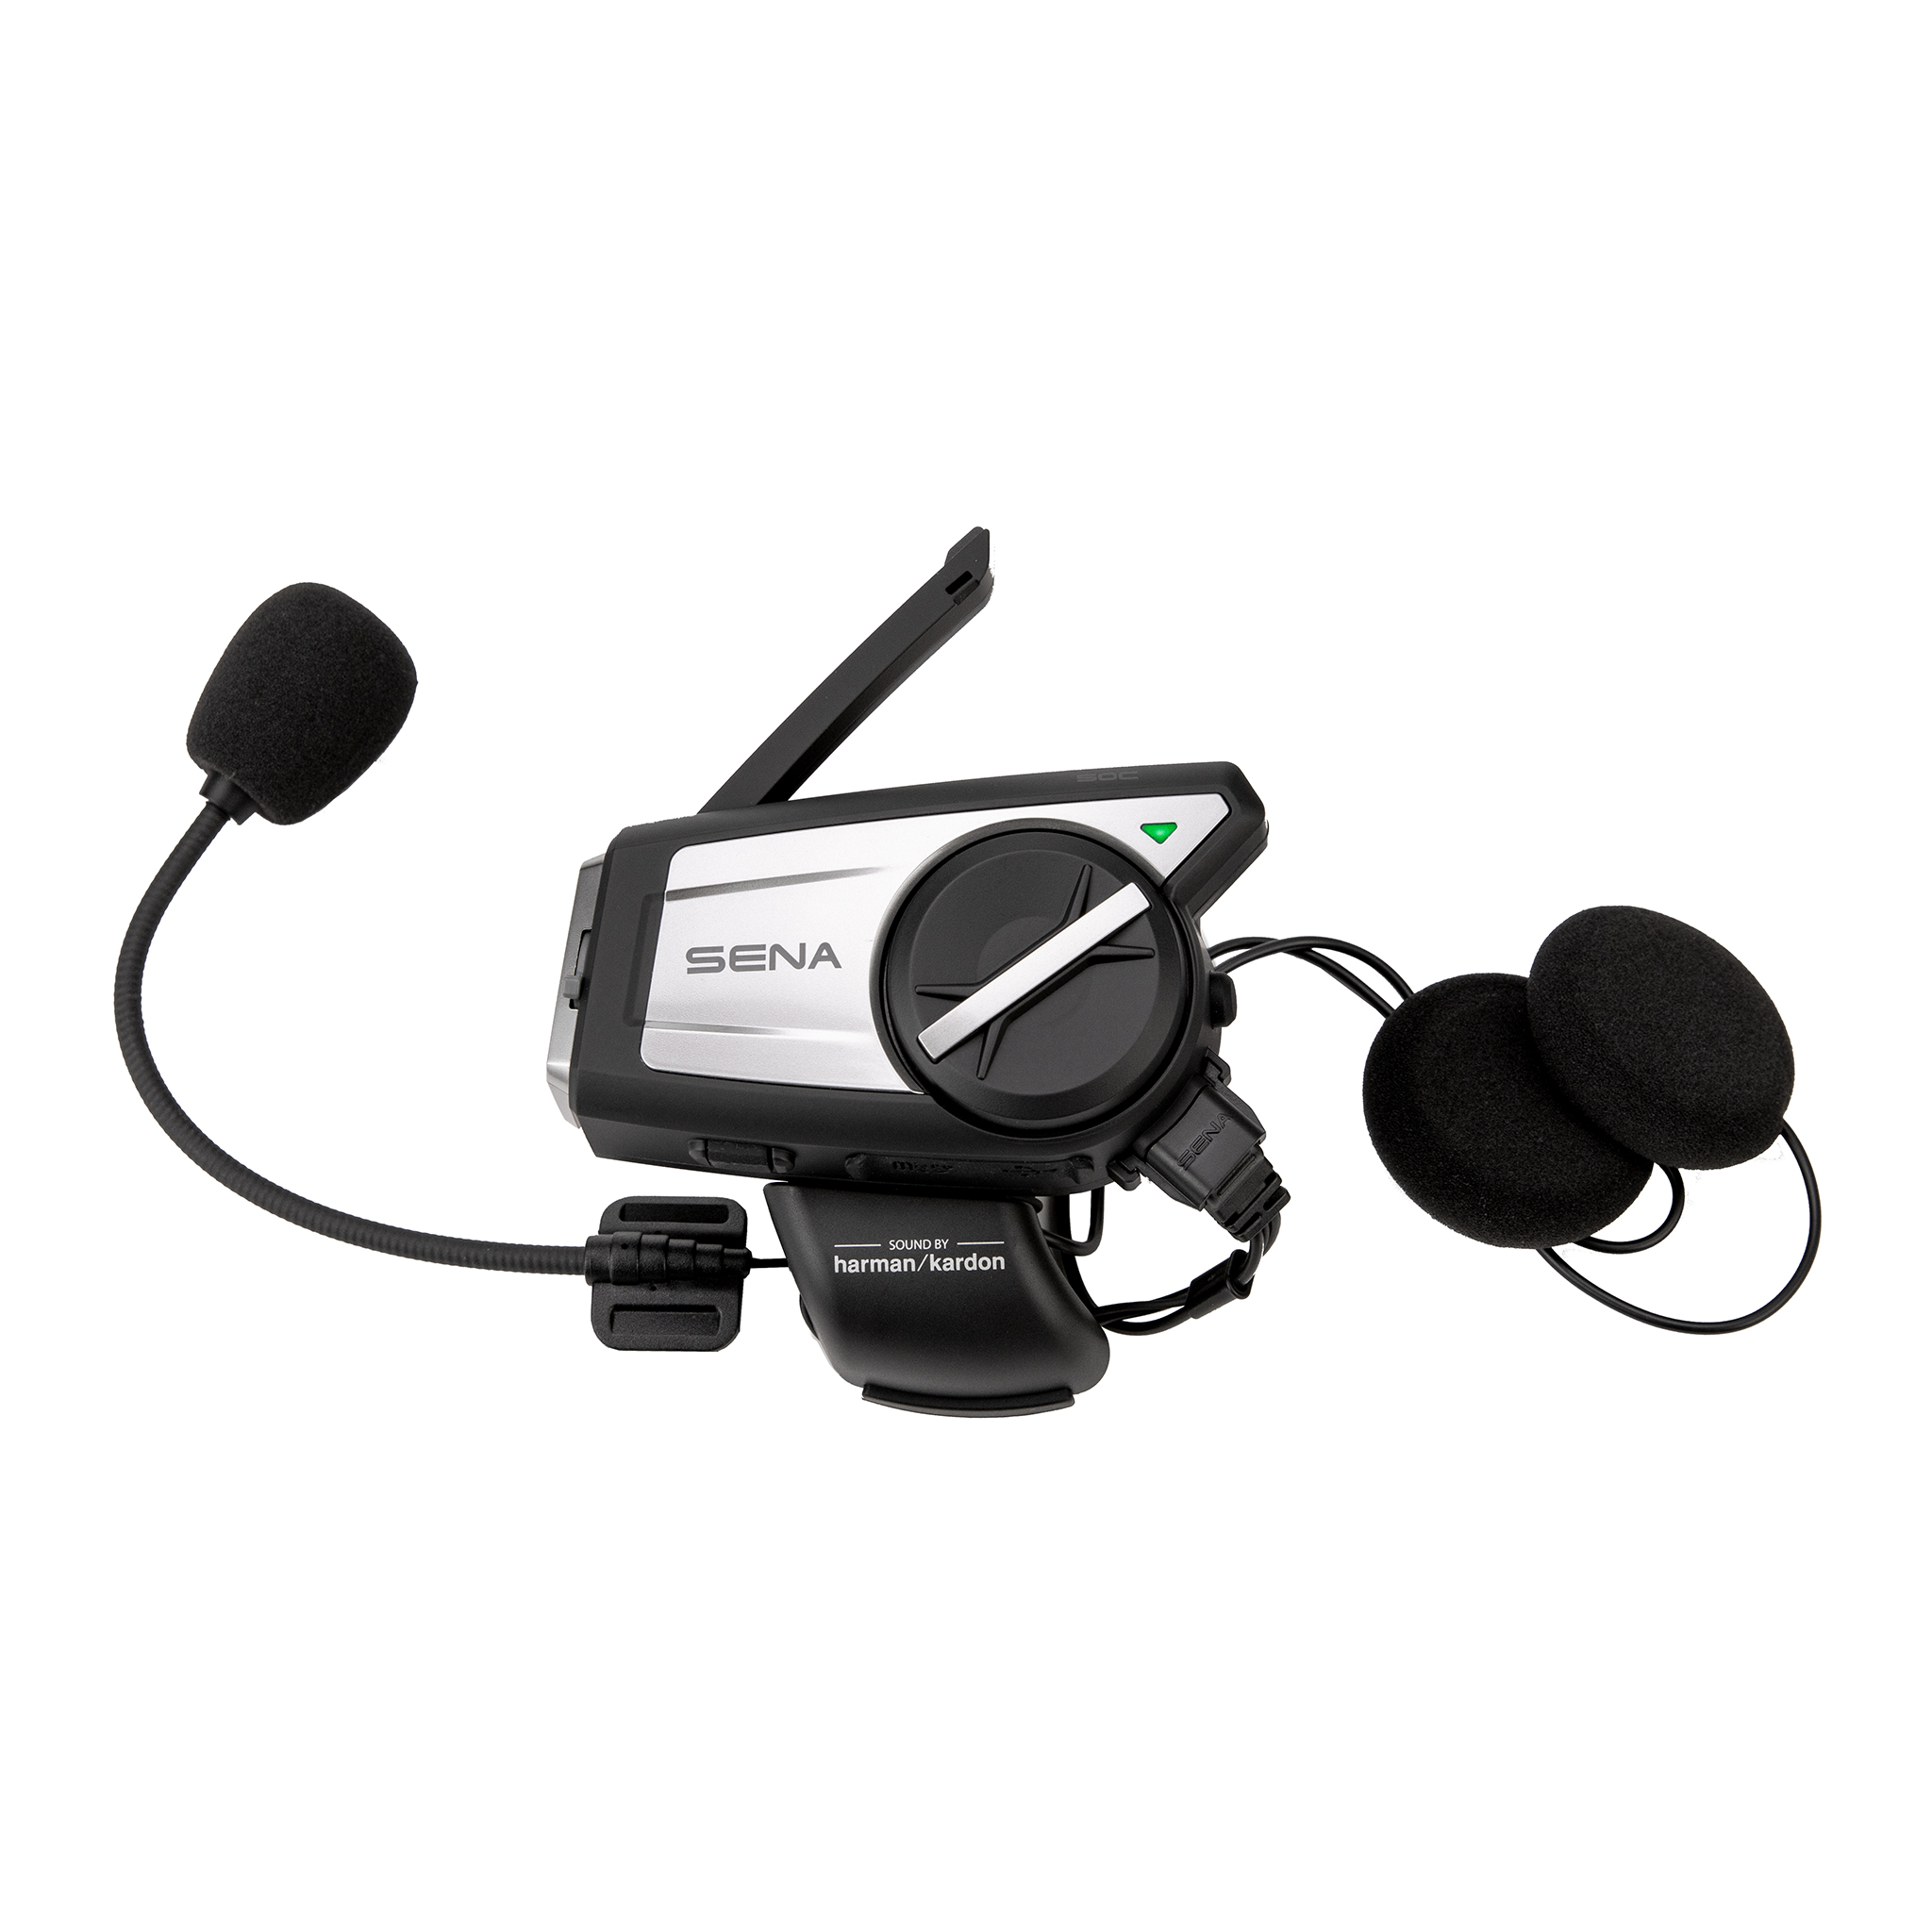 Sena 50C Harman Kardon Motorcycle Bluetooth Camera & Communication